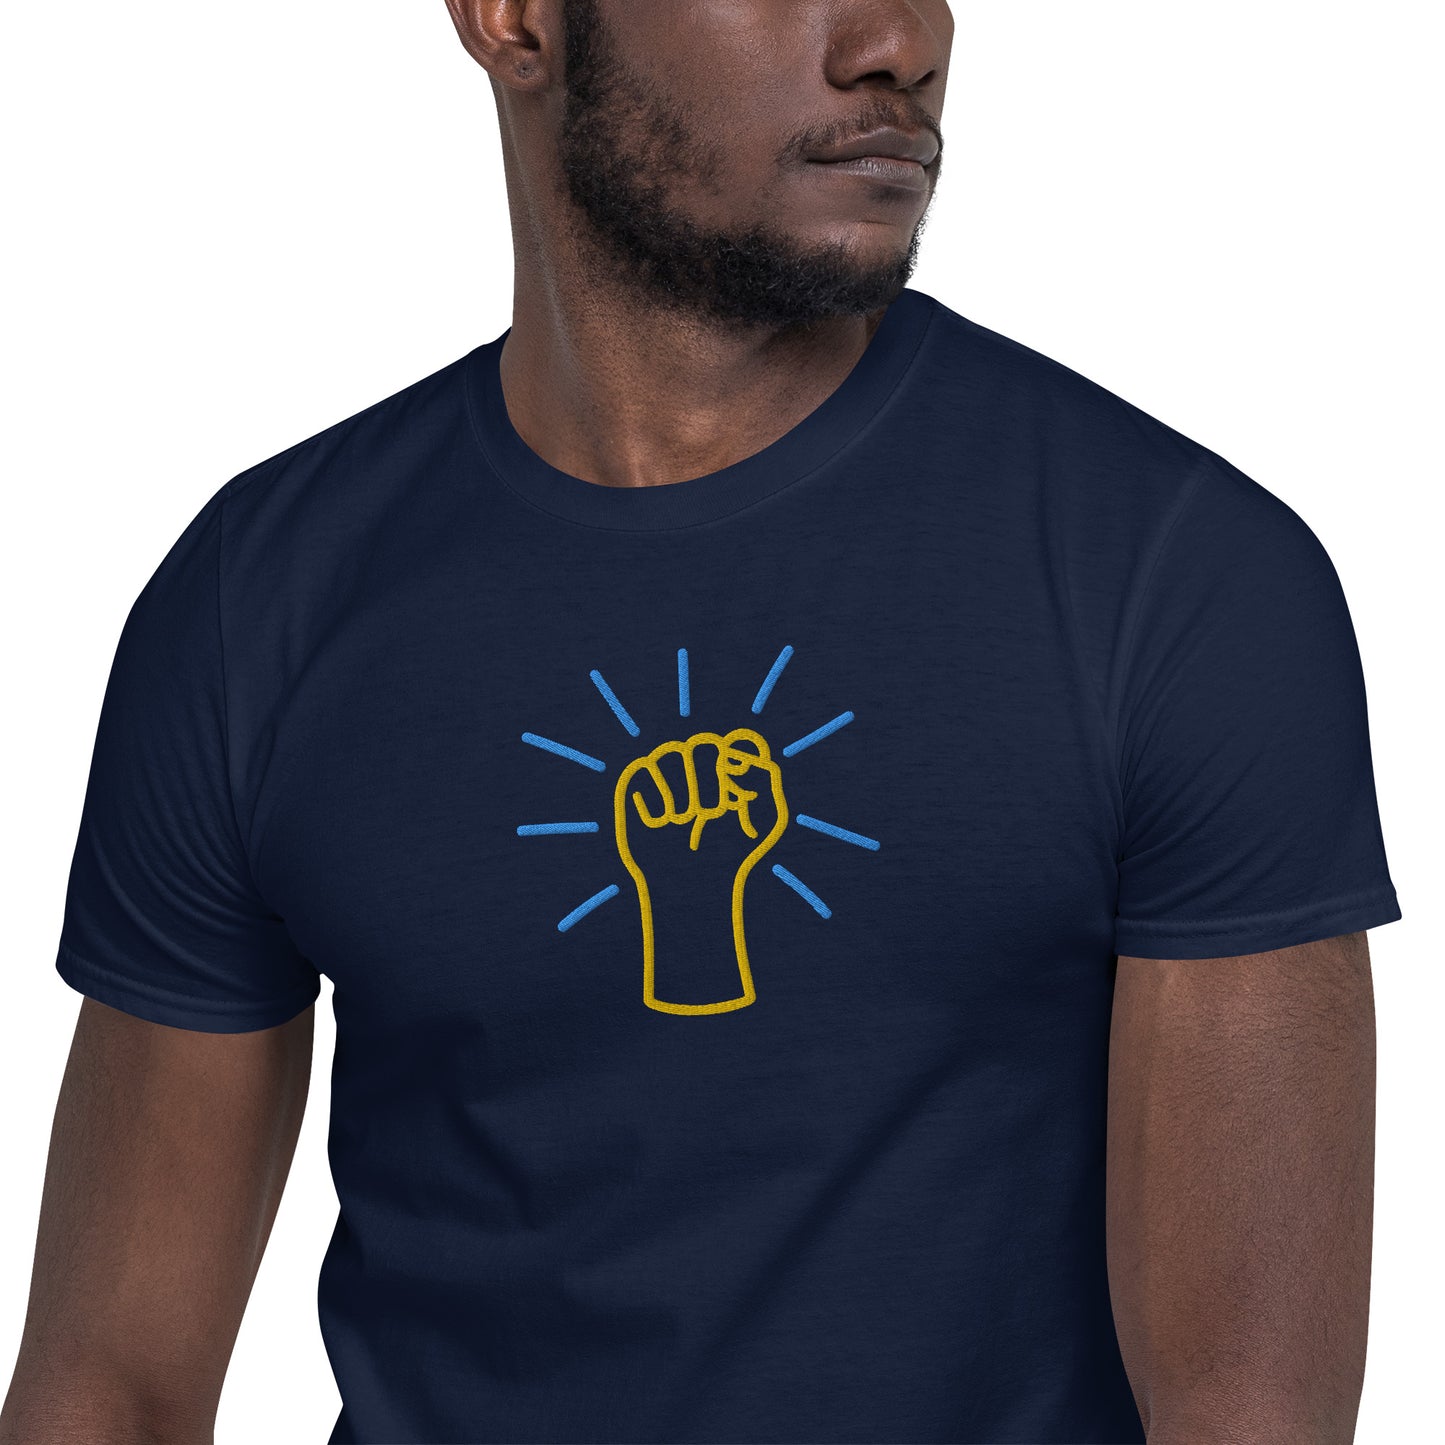 "Support Ukraine" men's t-shirt